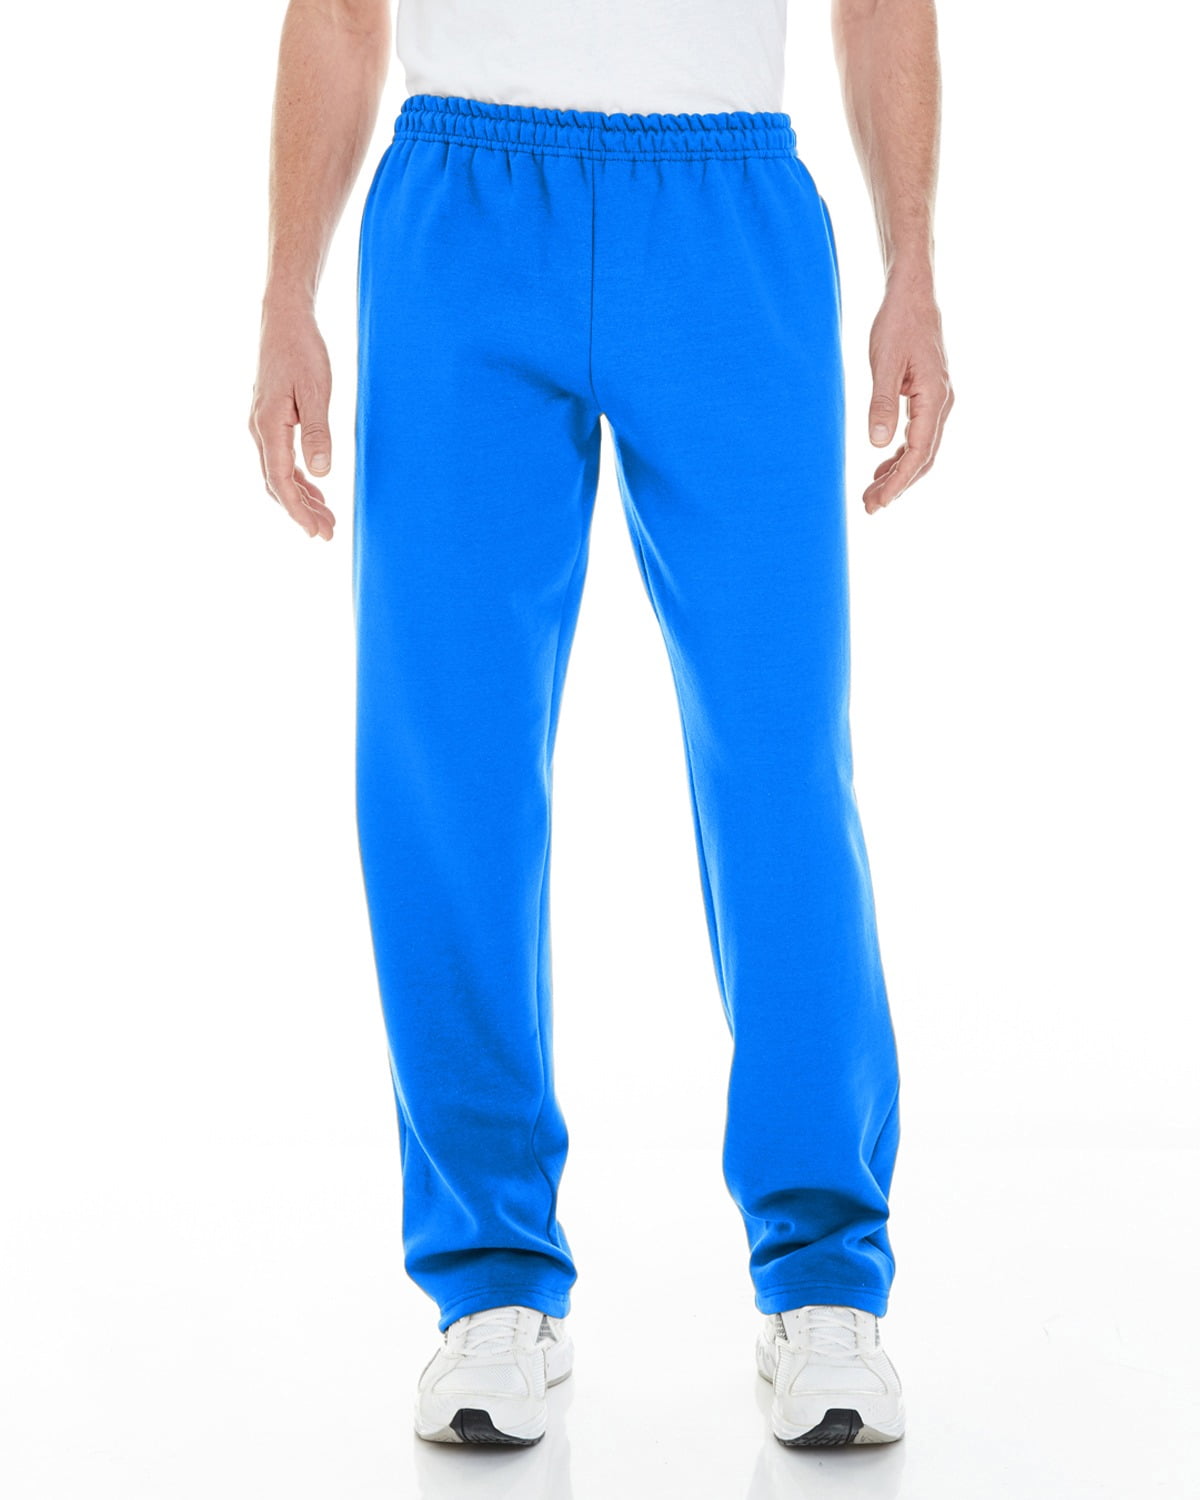 Heavy Blend 8 oz Royal Blue Pack of 12 L G184 50/50 Open-Bottom Sweatpants 